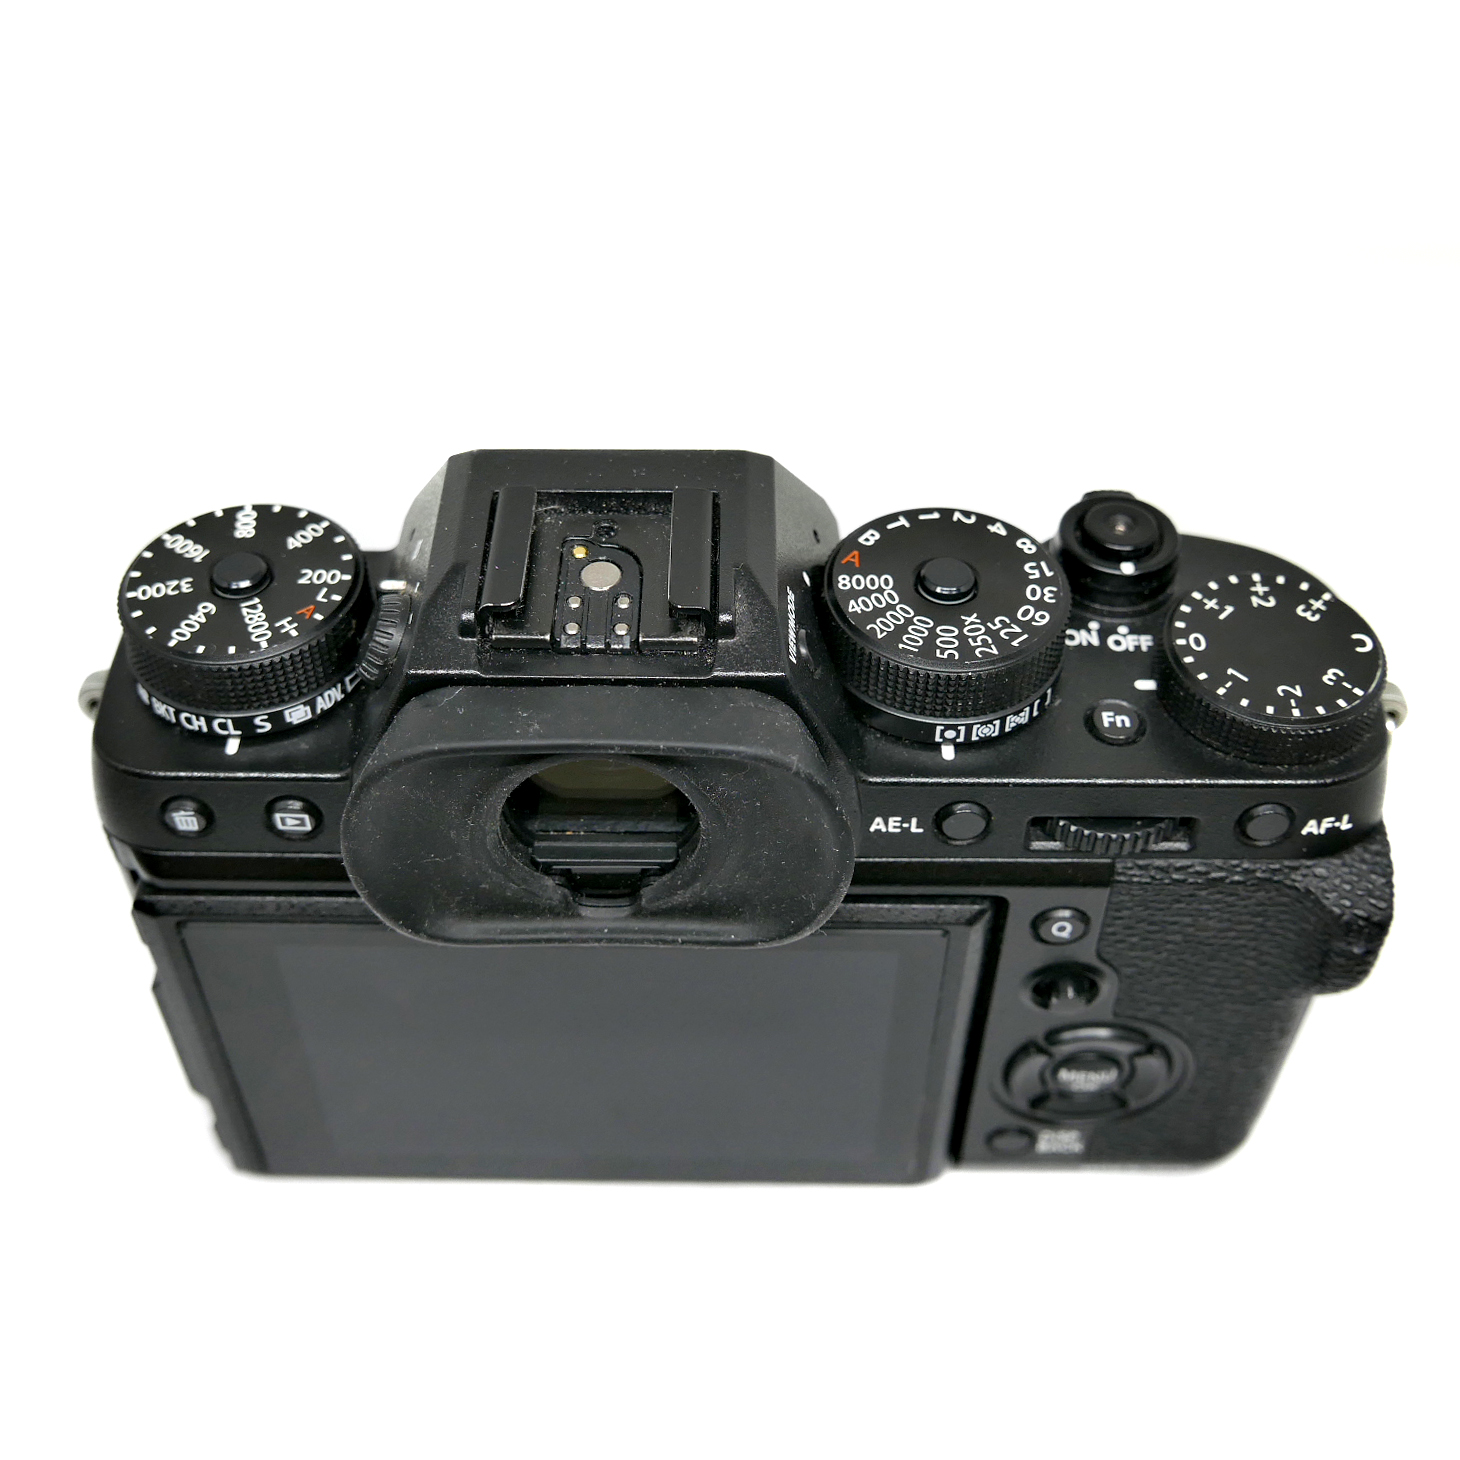 (Myyty) Fujifilm X-T2 runko - Musta (SC:19105) (Käytetty)